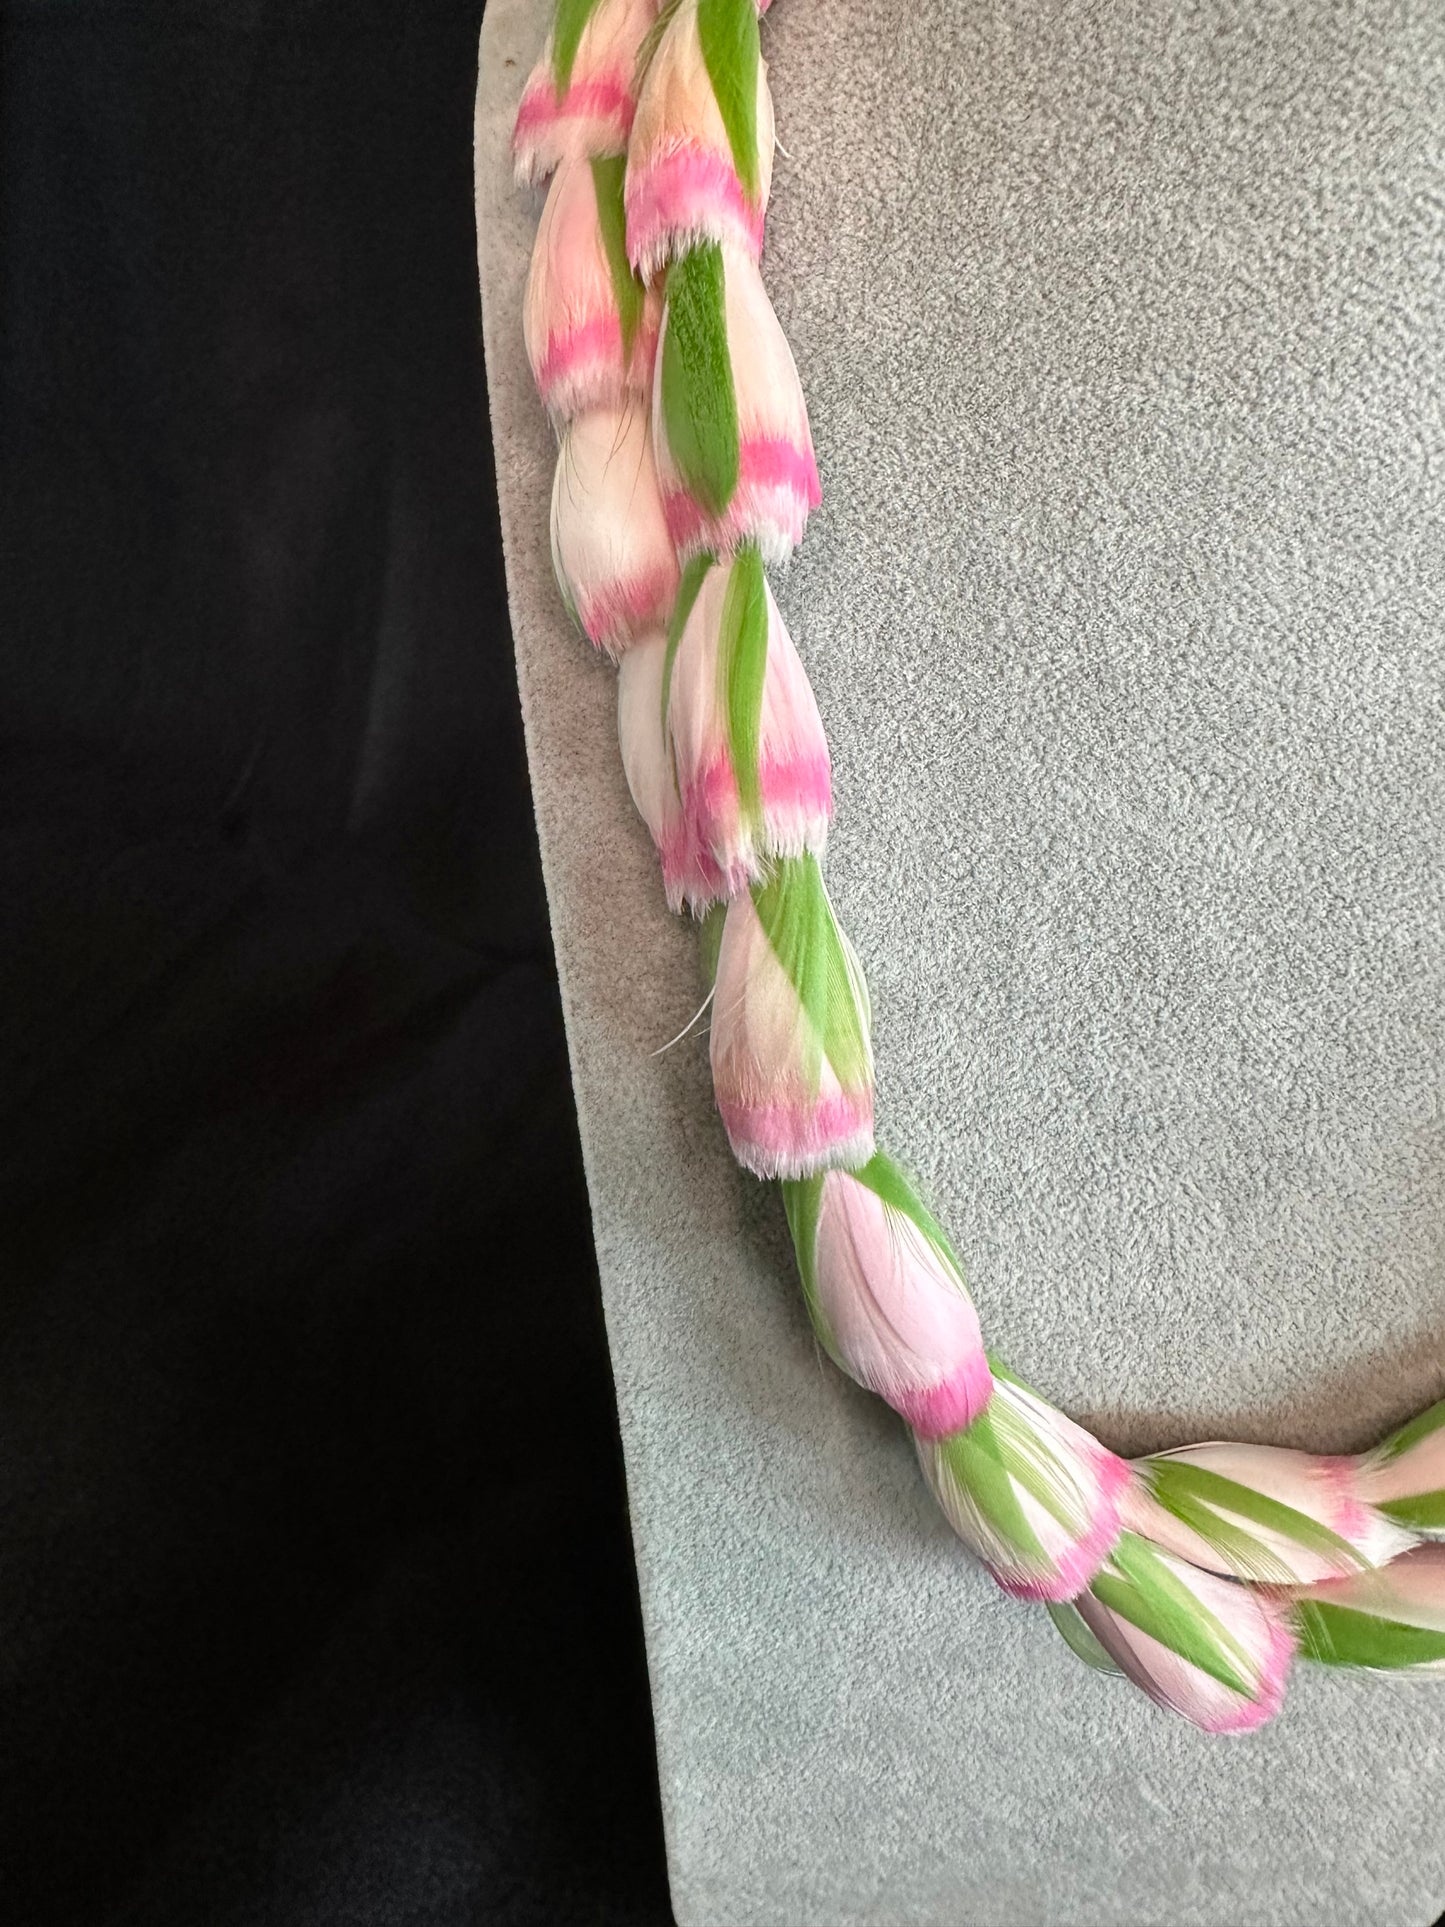 Double strand Pink Plumeria Lokelani lei hulu (rosebud feather lei)